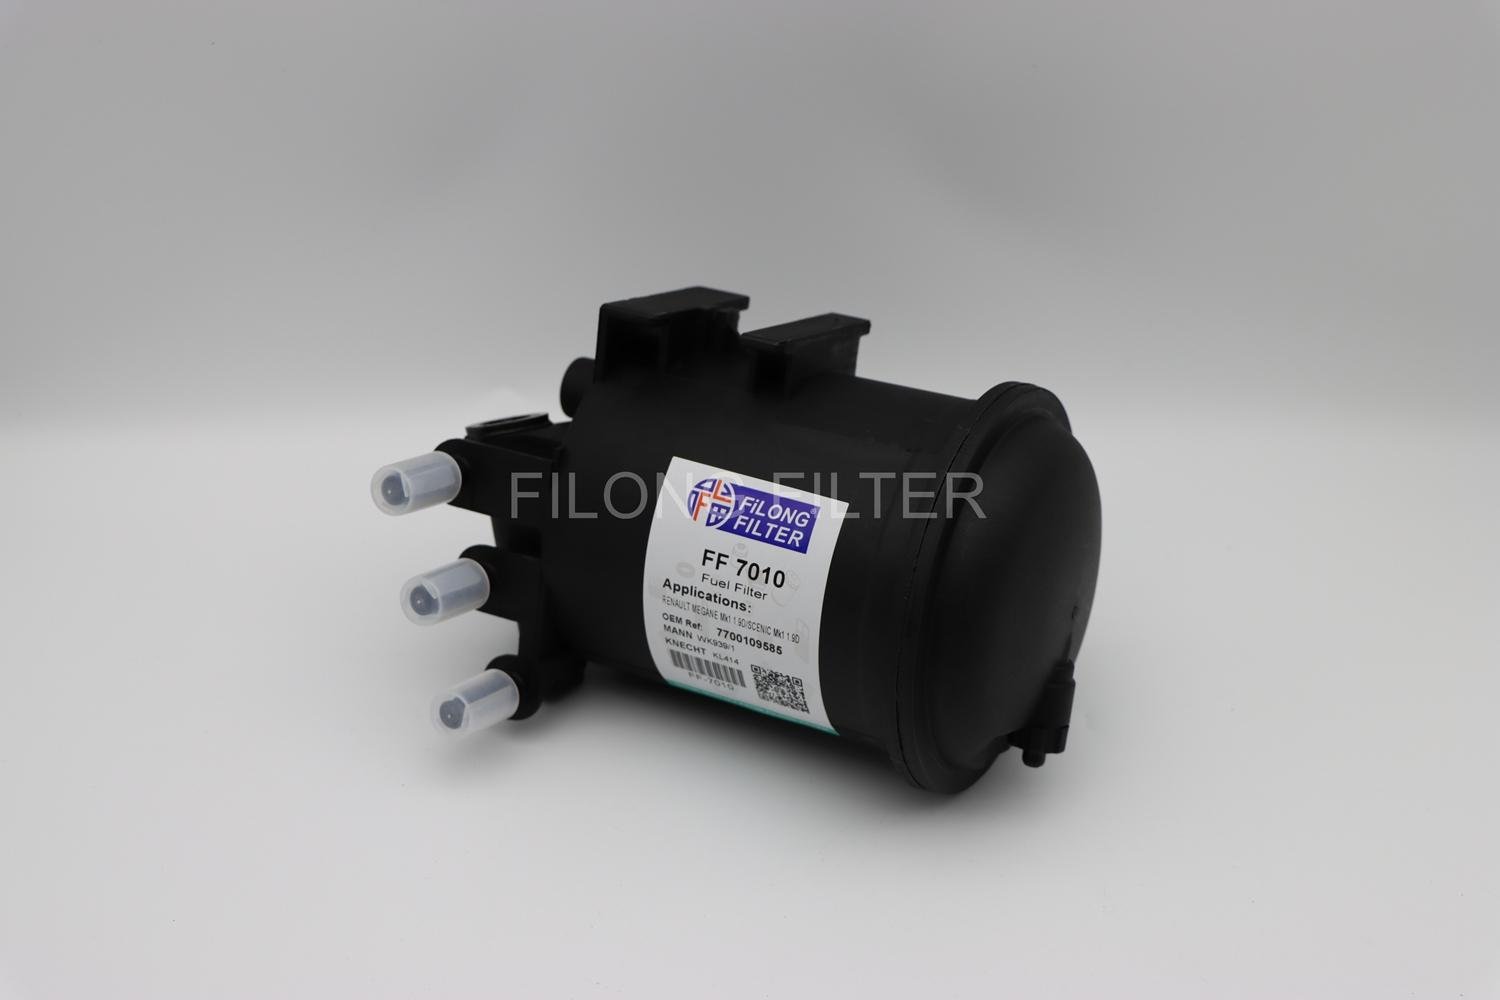 FILONG Fuel Filter FF-7010  WK939/1 7700109585  8200416946 FP5646 PS9537   KL414 3